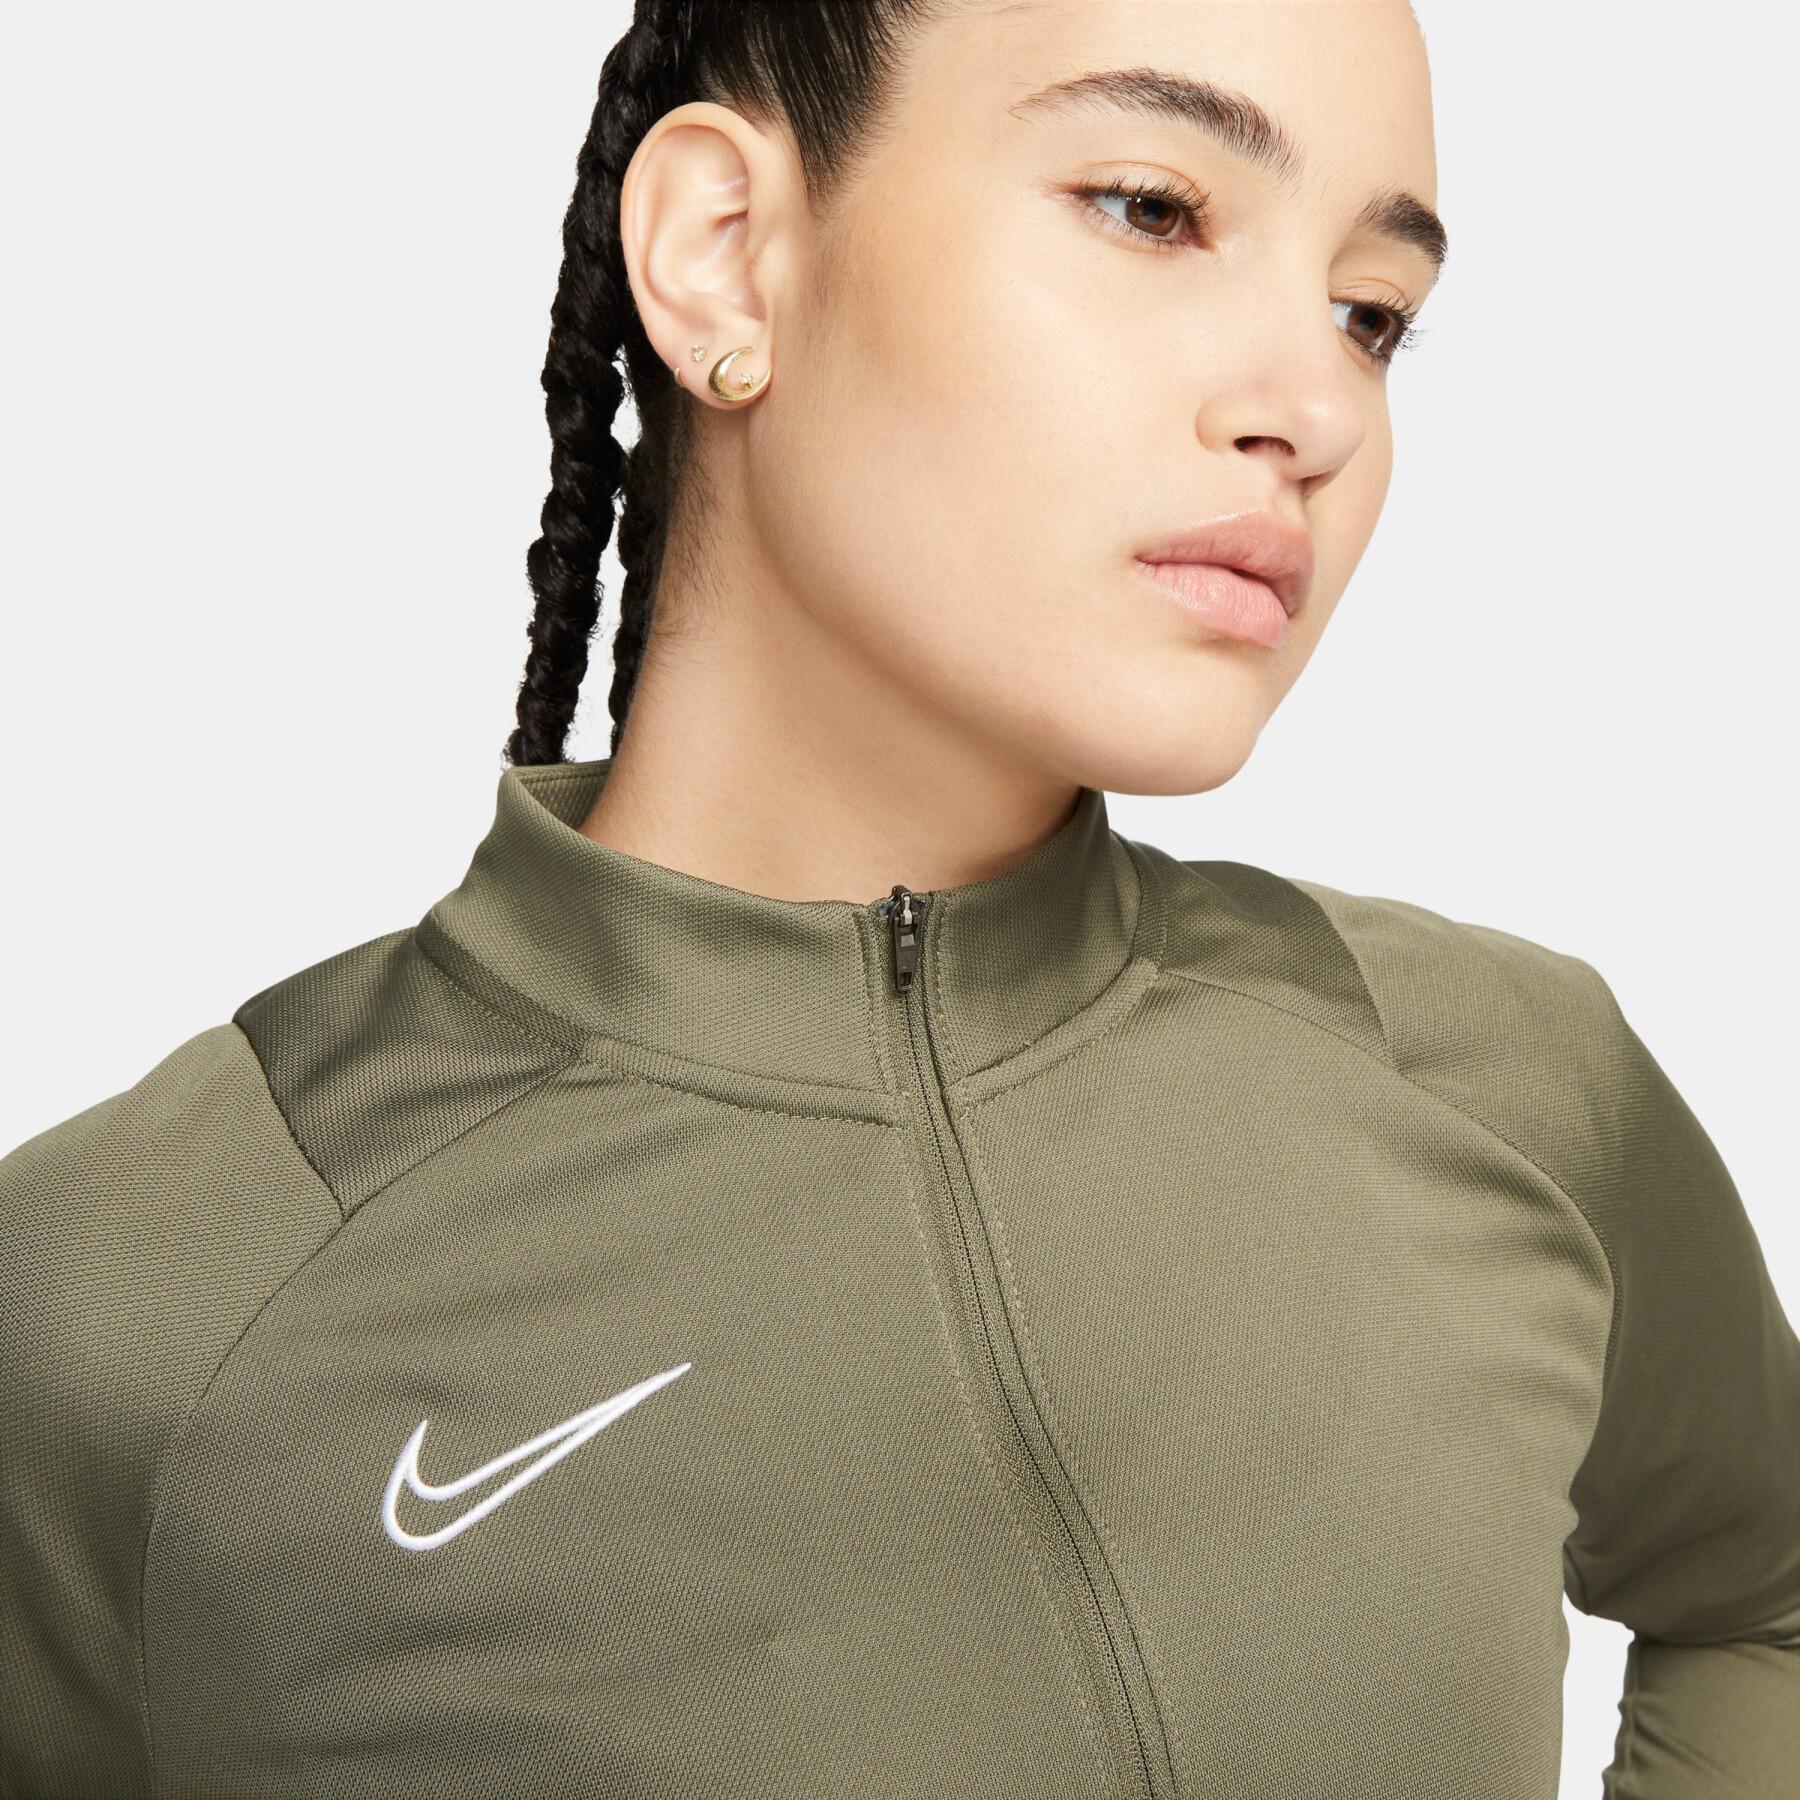 Survêtement femme Nike Academy K